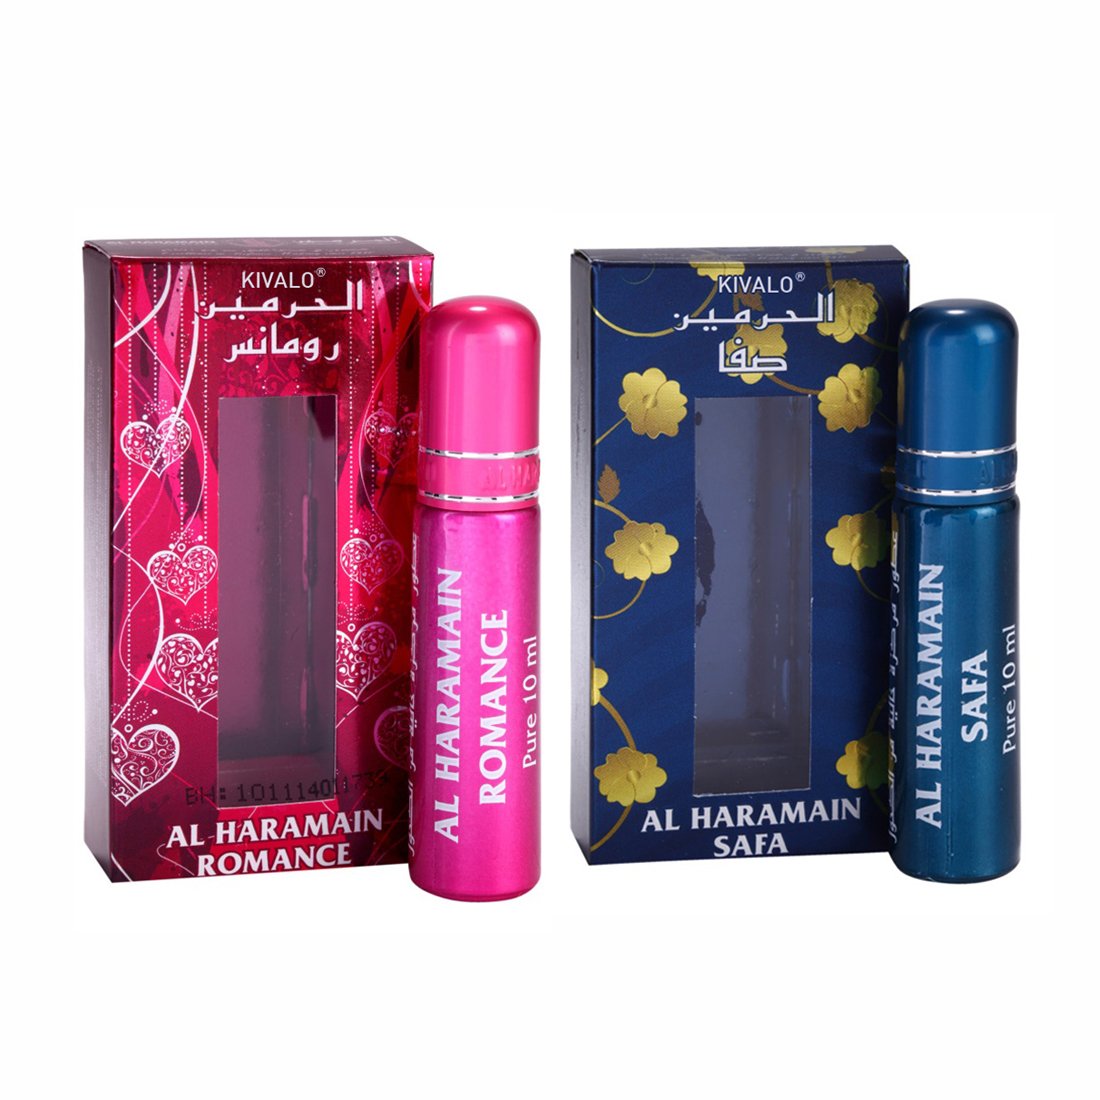 Al Haramain Romance & Safa Roll On Attar 10 ml Pack of 2